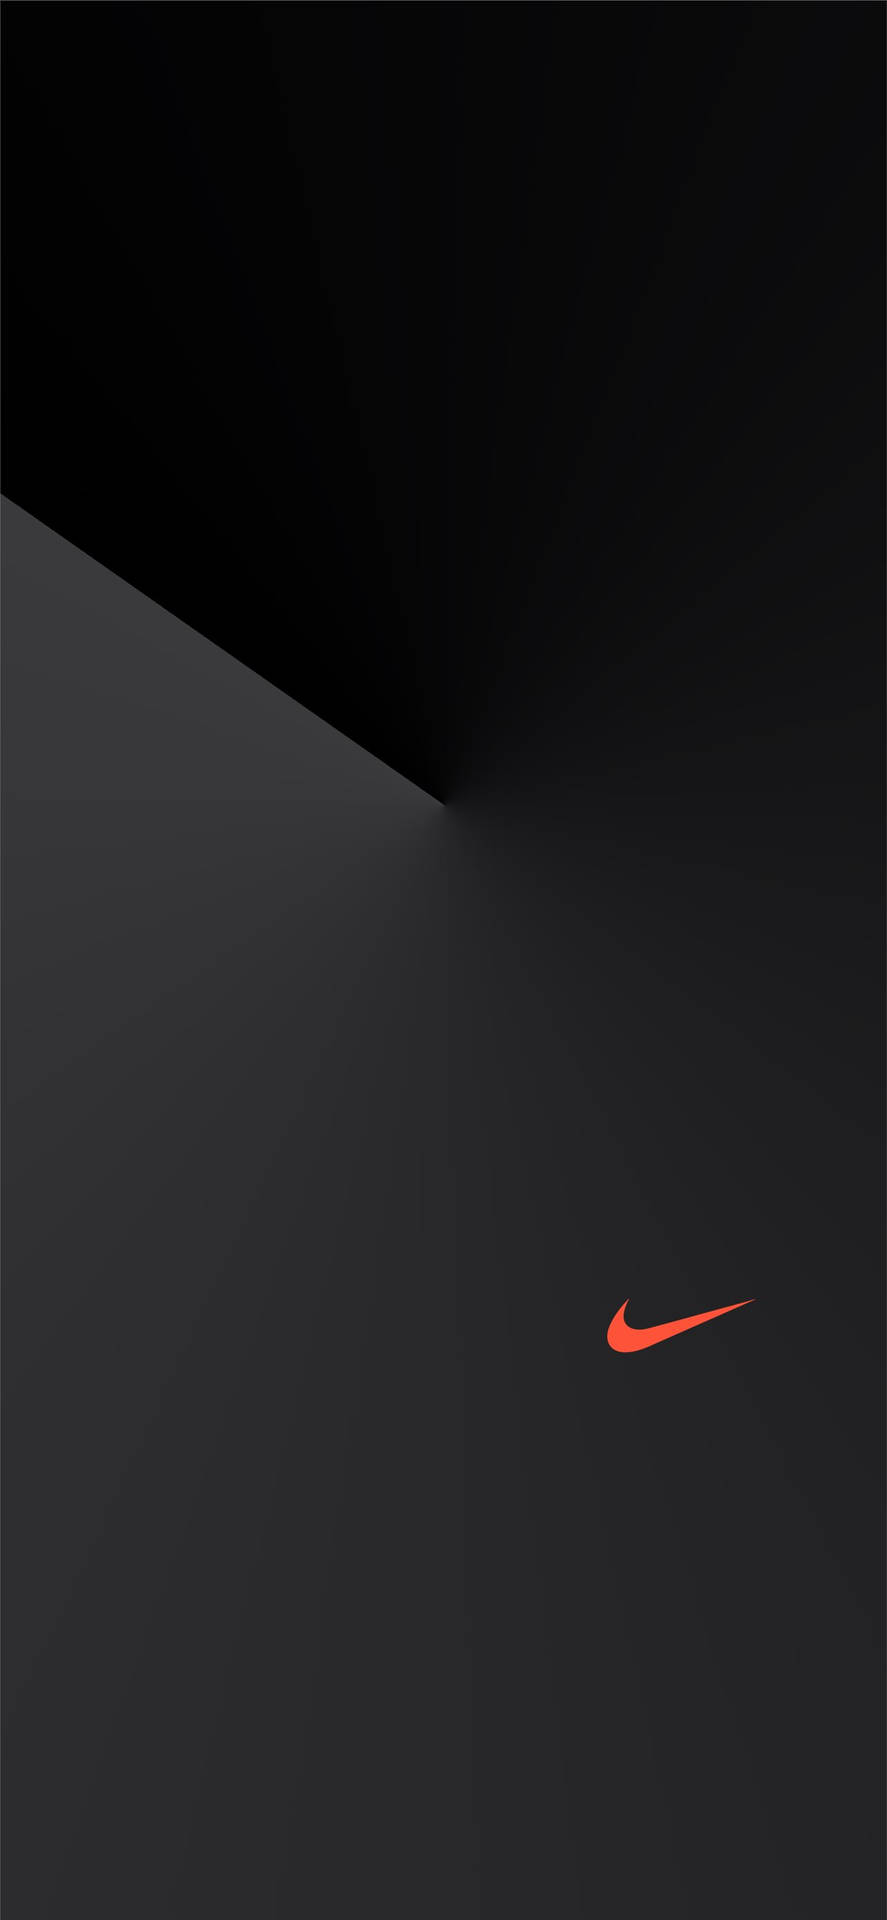 Small Nike Iphone Logo Background